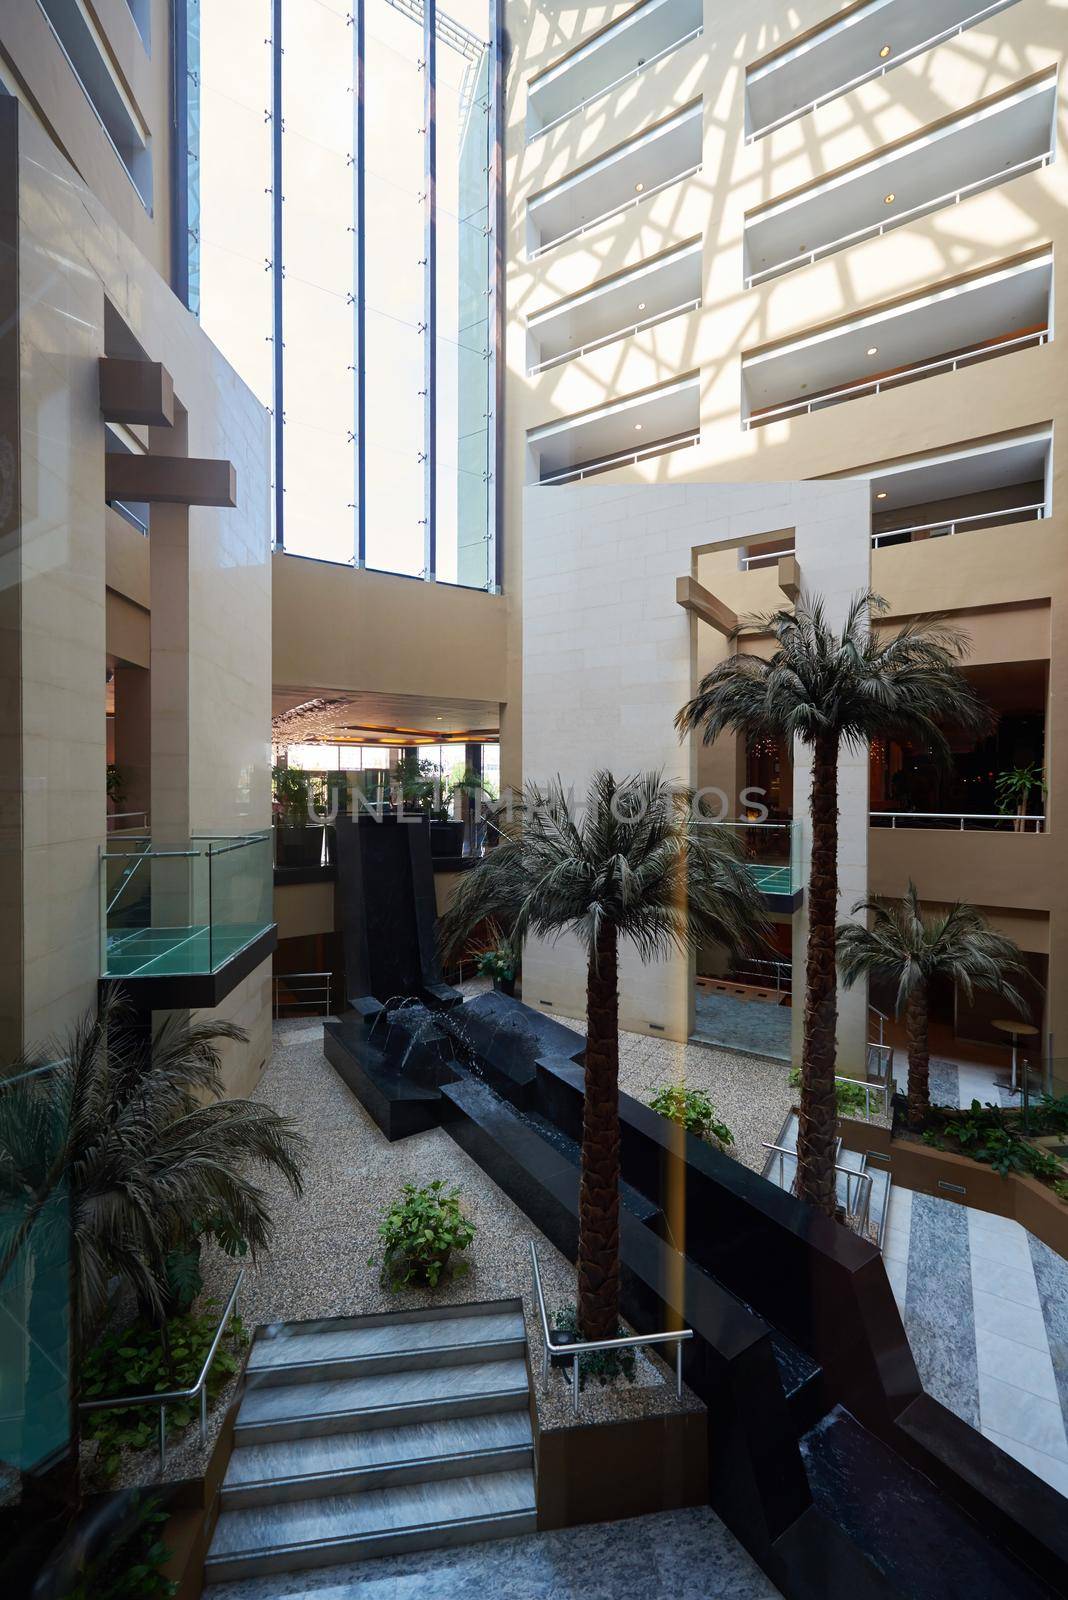 luxury business hotel lobby interior with modern design